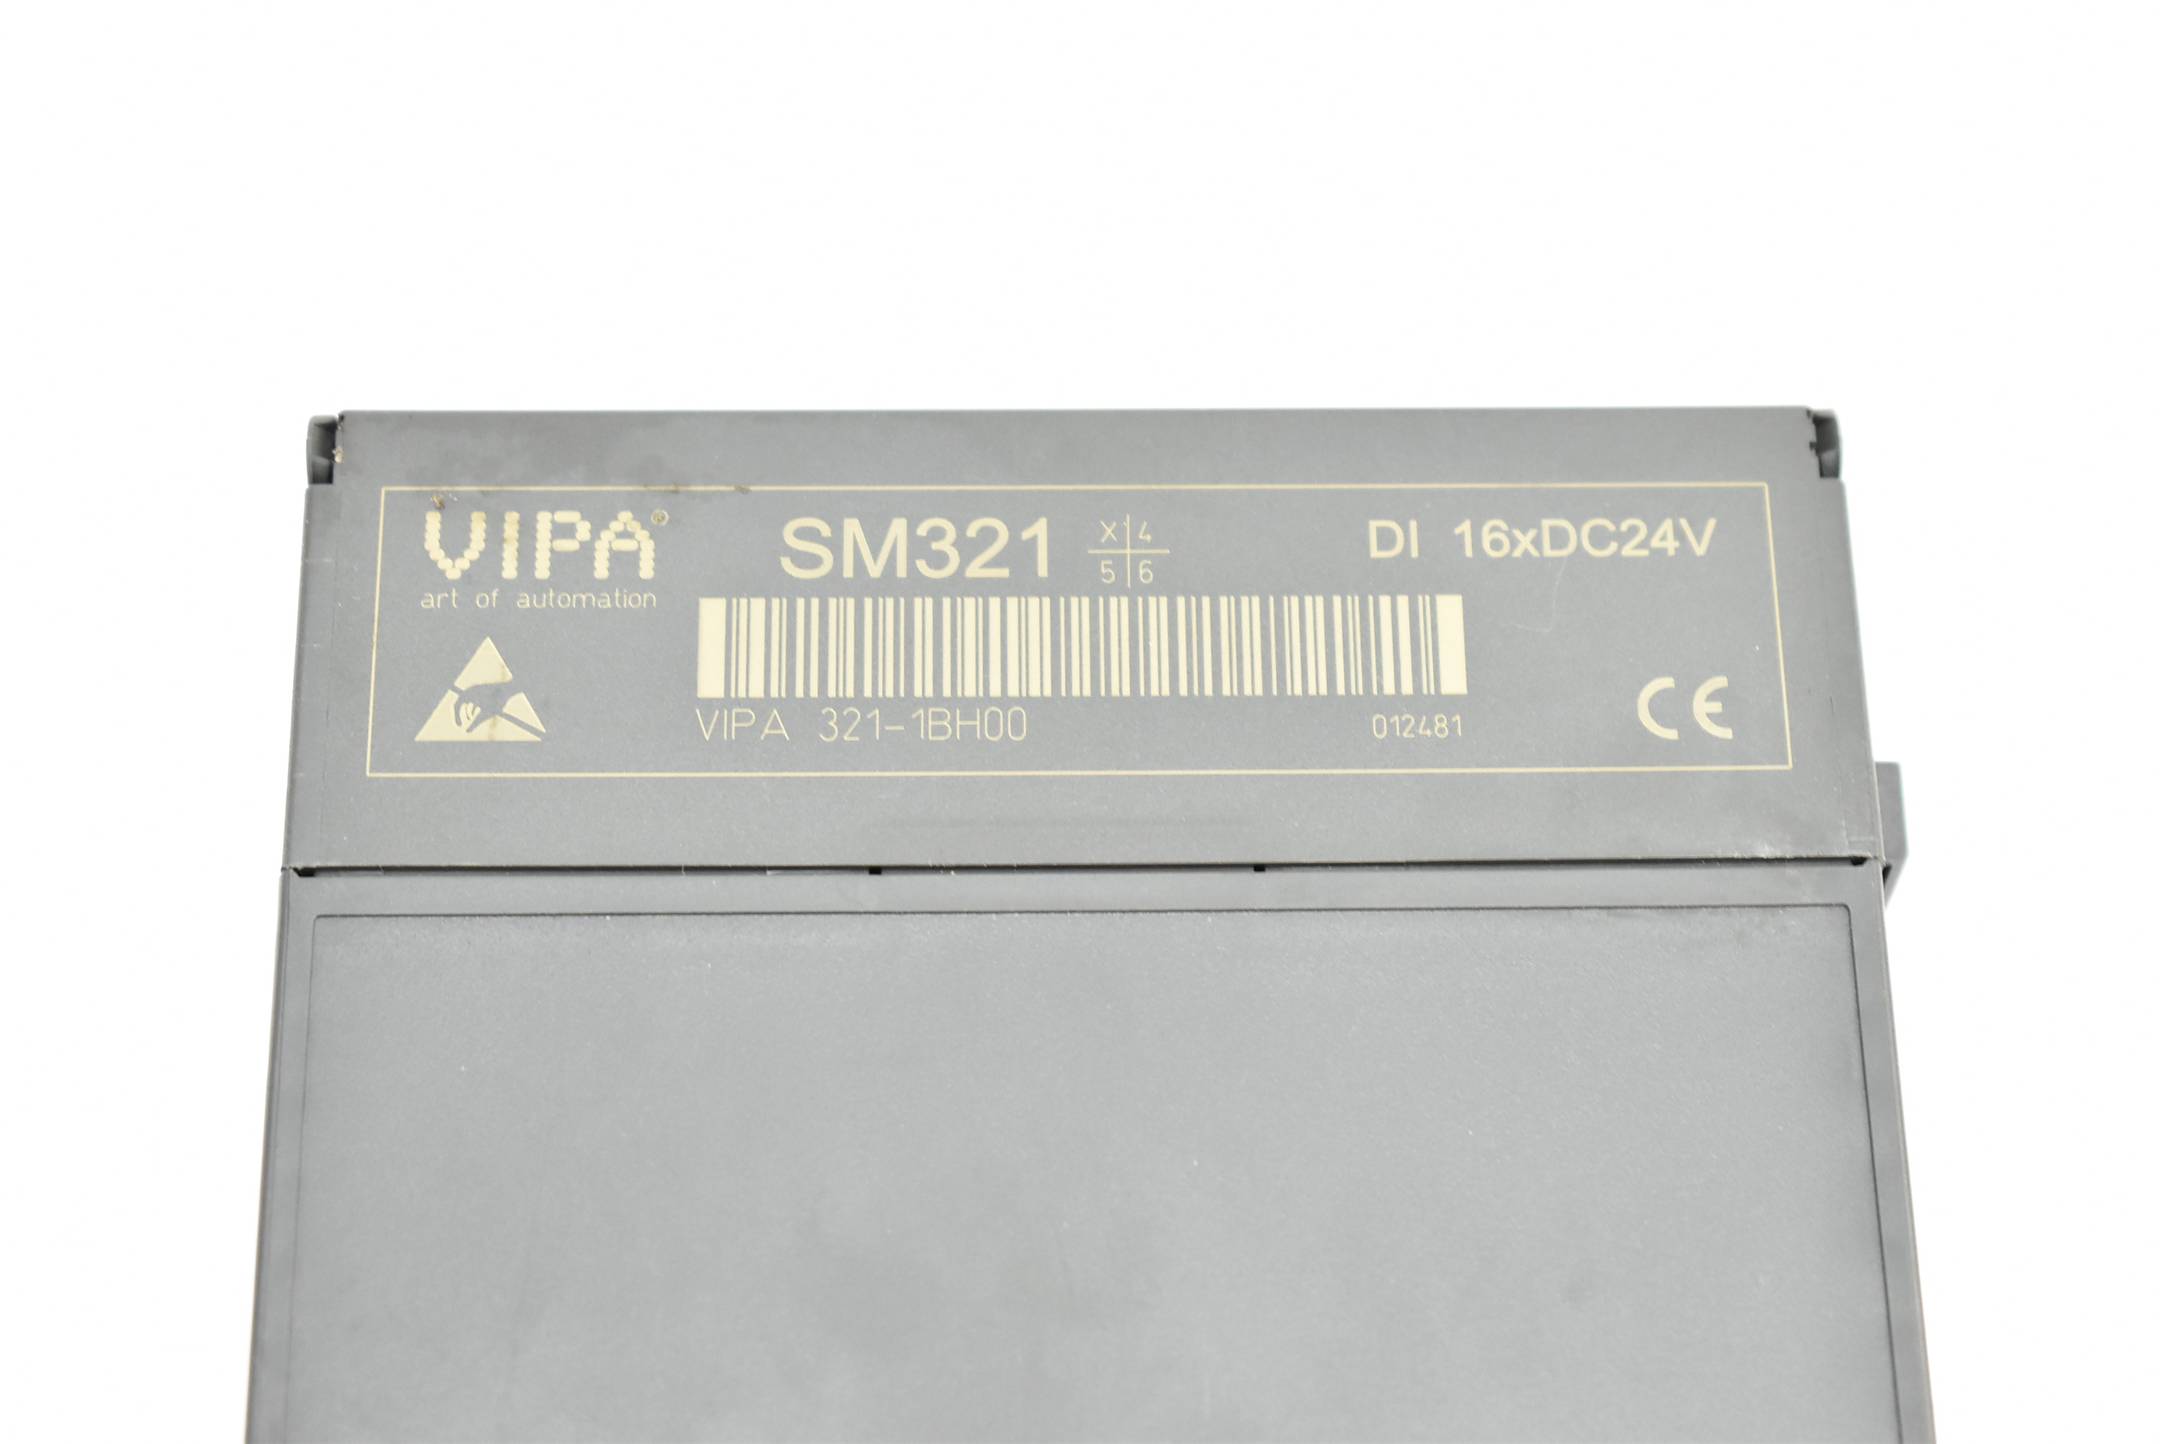 Vipa SM 321-1BH00 DI 16xDC24V